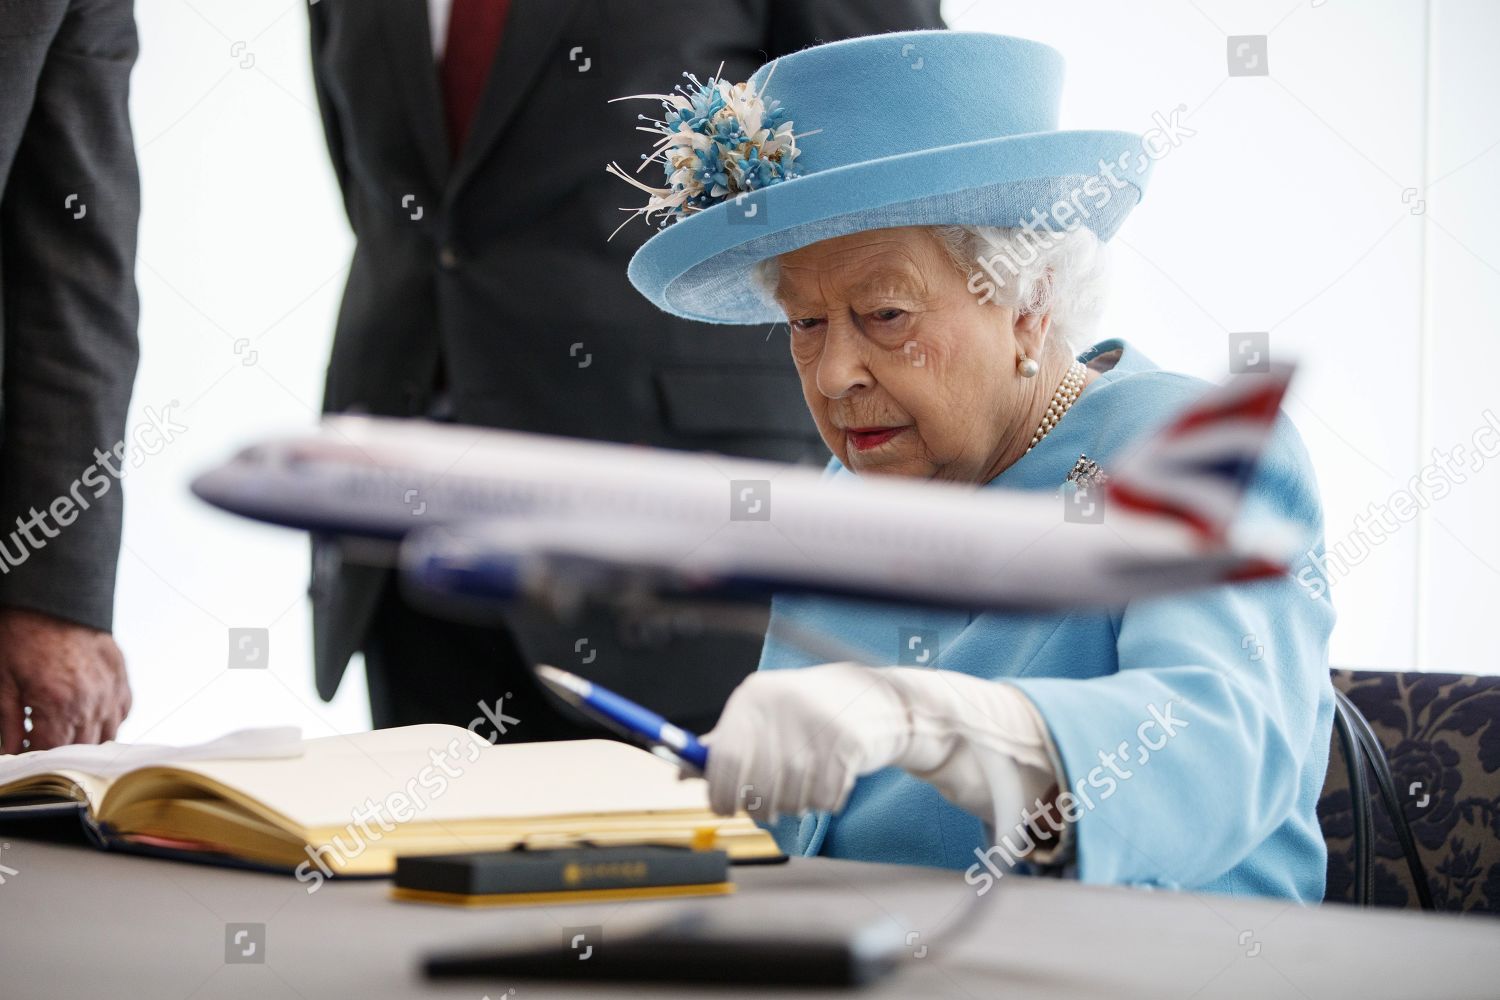 queen-elizabeth-ii-visits-british-airways-headquarters-heathrow-airport-london-uk-shutterstock-editorial-10245682n.jpg